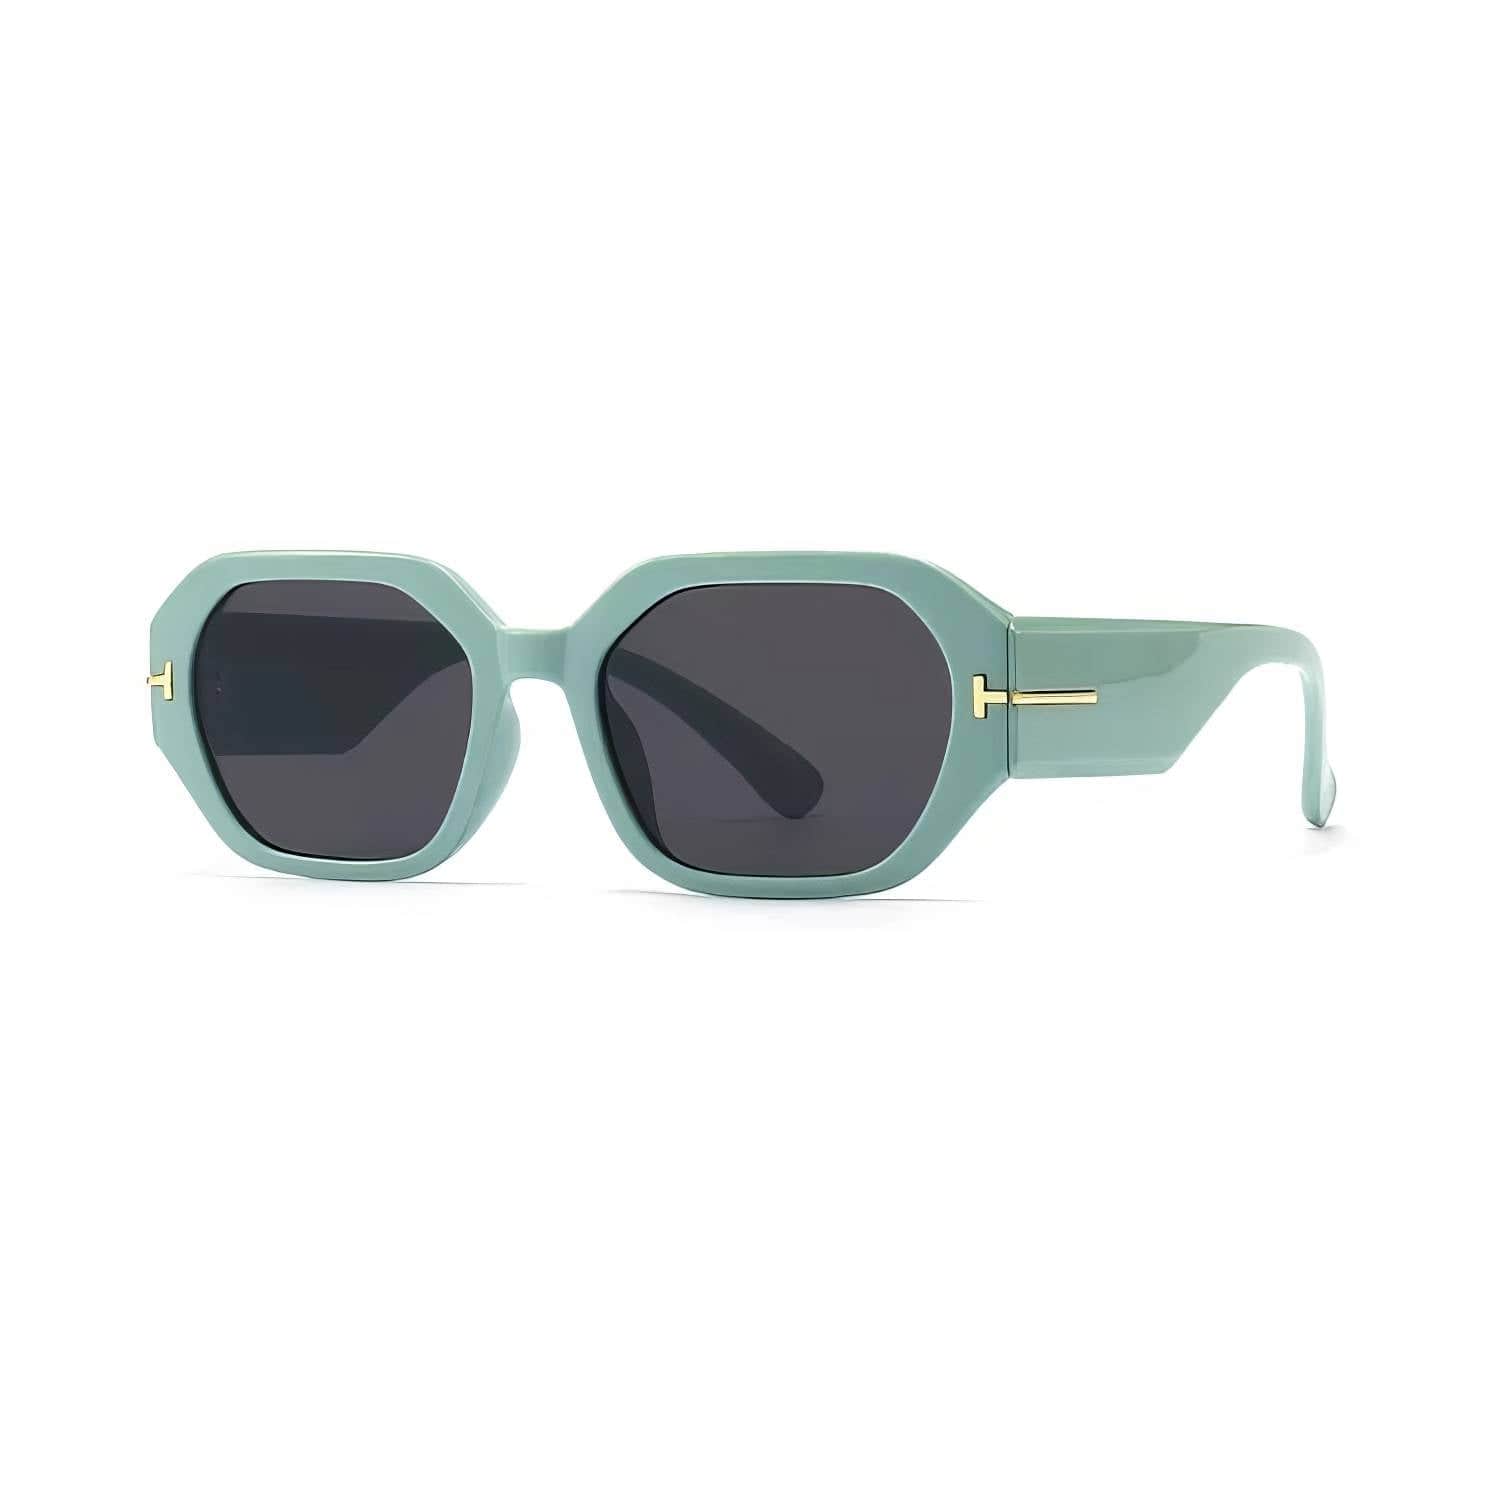 Fashion Square T-Frame Sunglasses Green Black/Gray / Resin